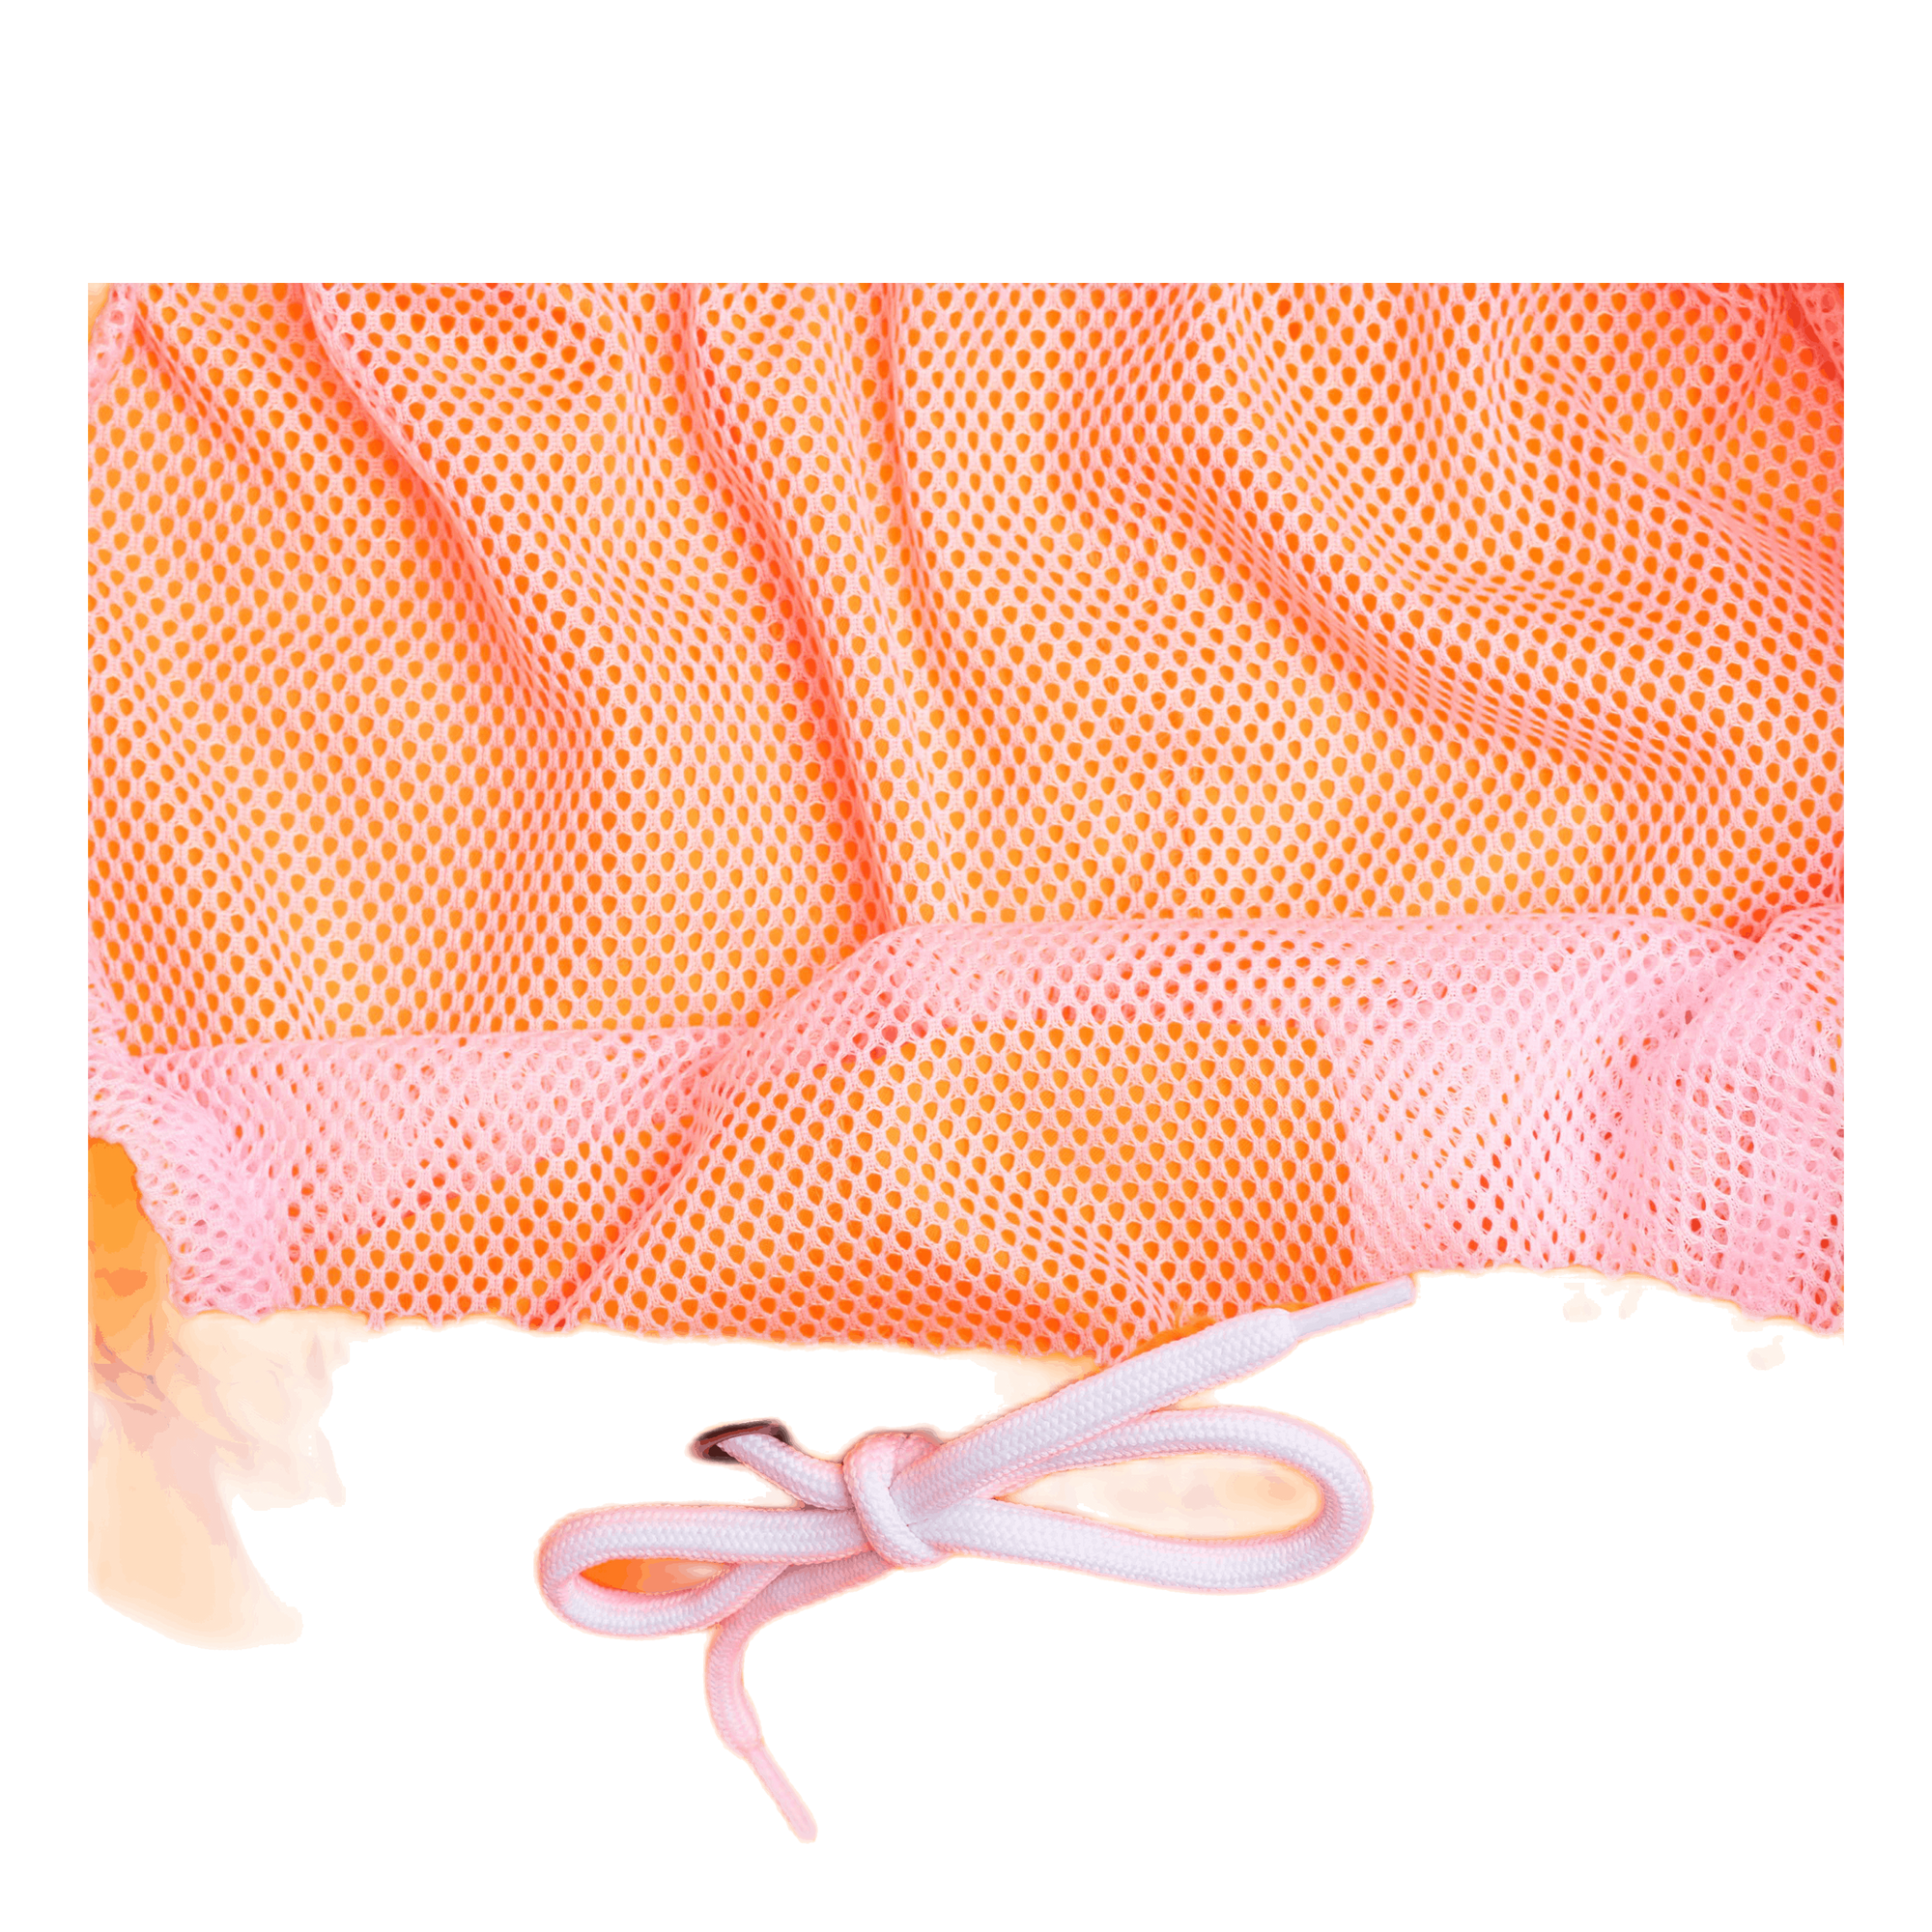 Palm Swim Shorts Orange